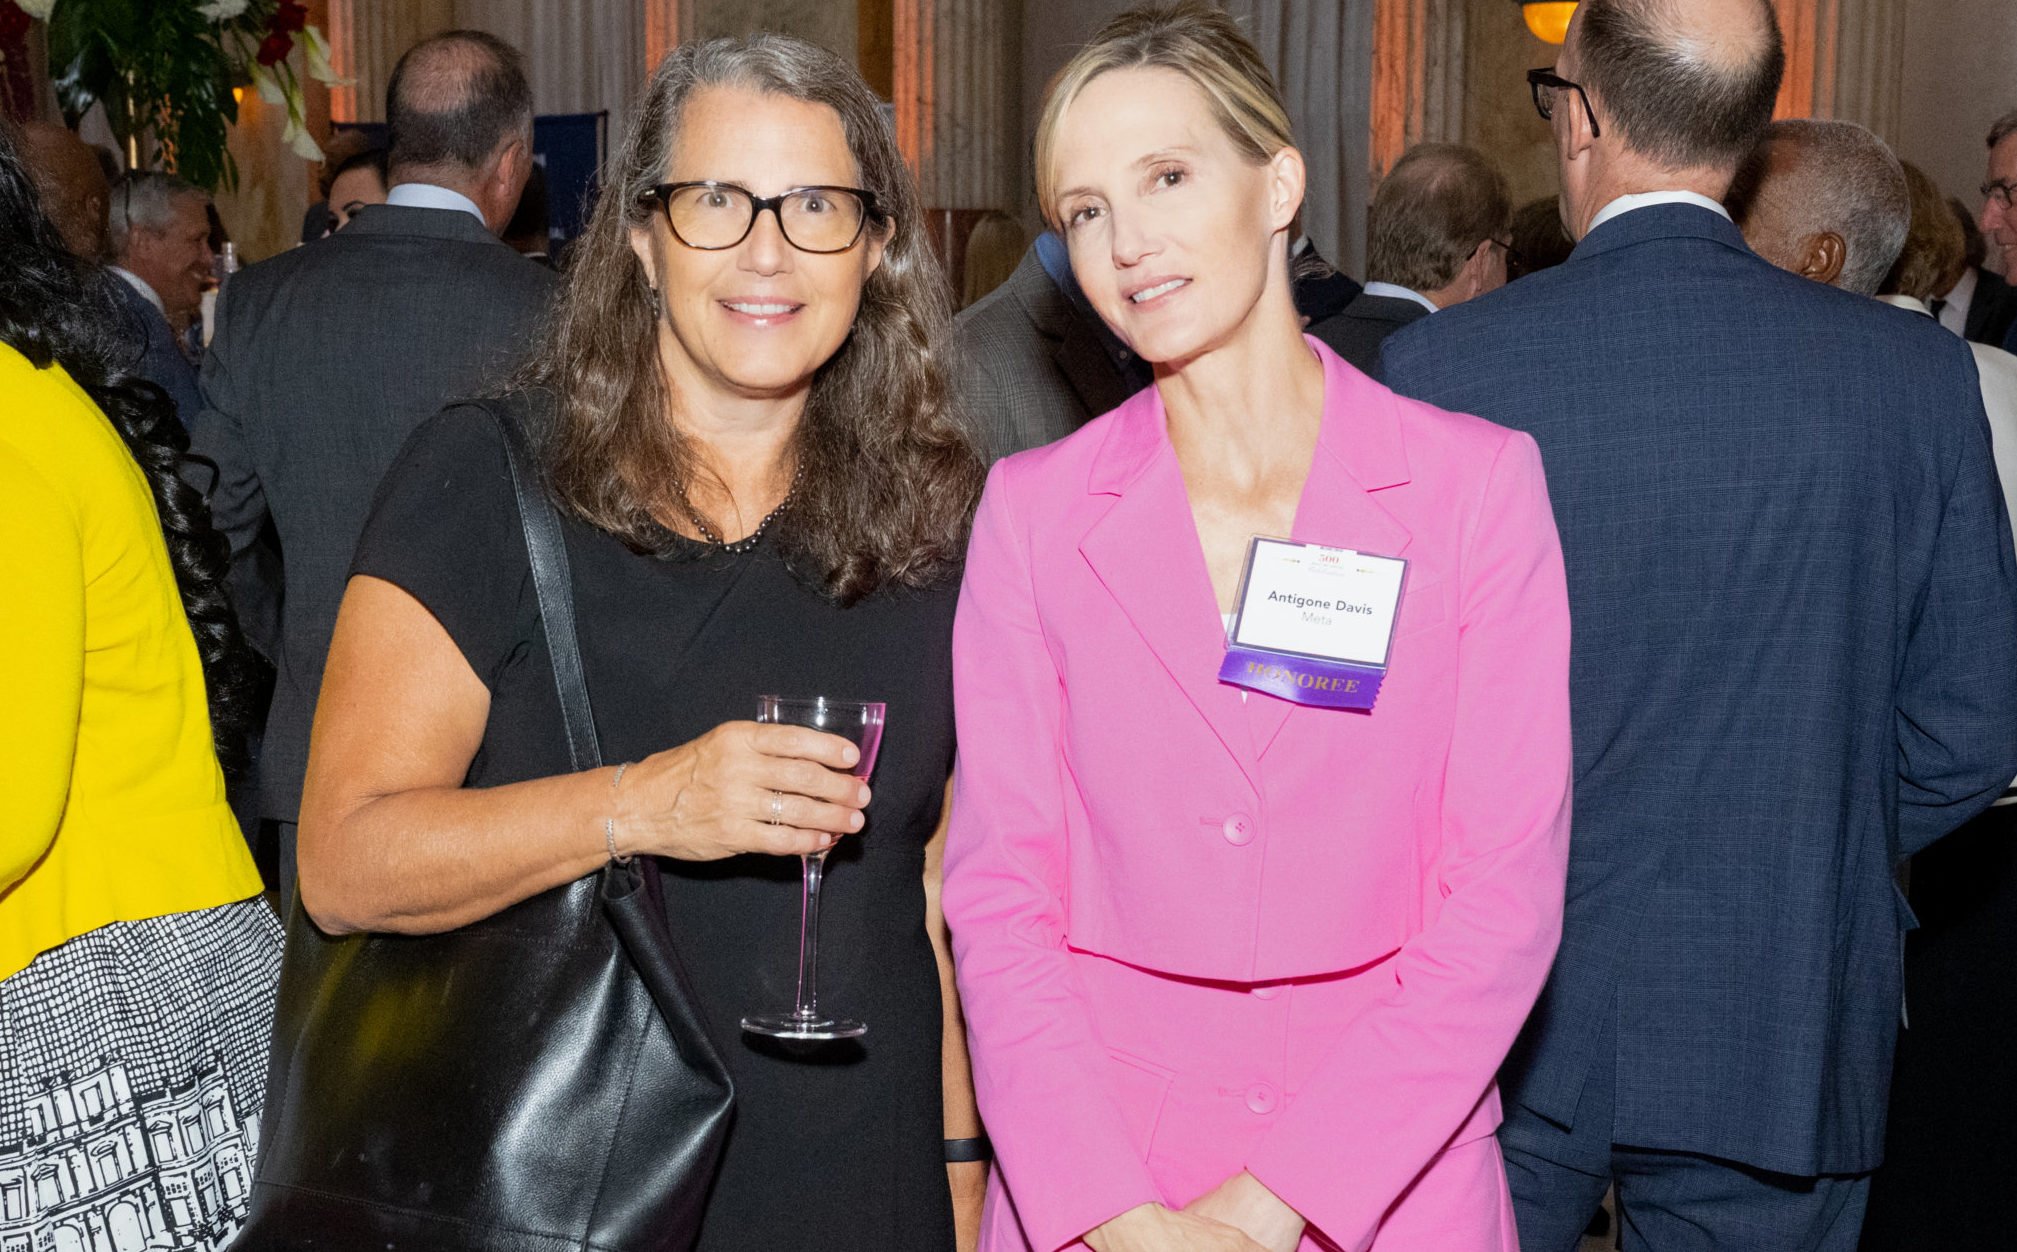 Cynthia Terell and Antigone Davis at Washingtonian's 500 Most Influential Celebration